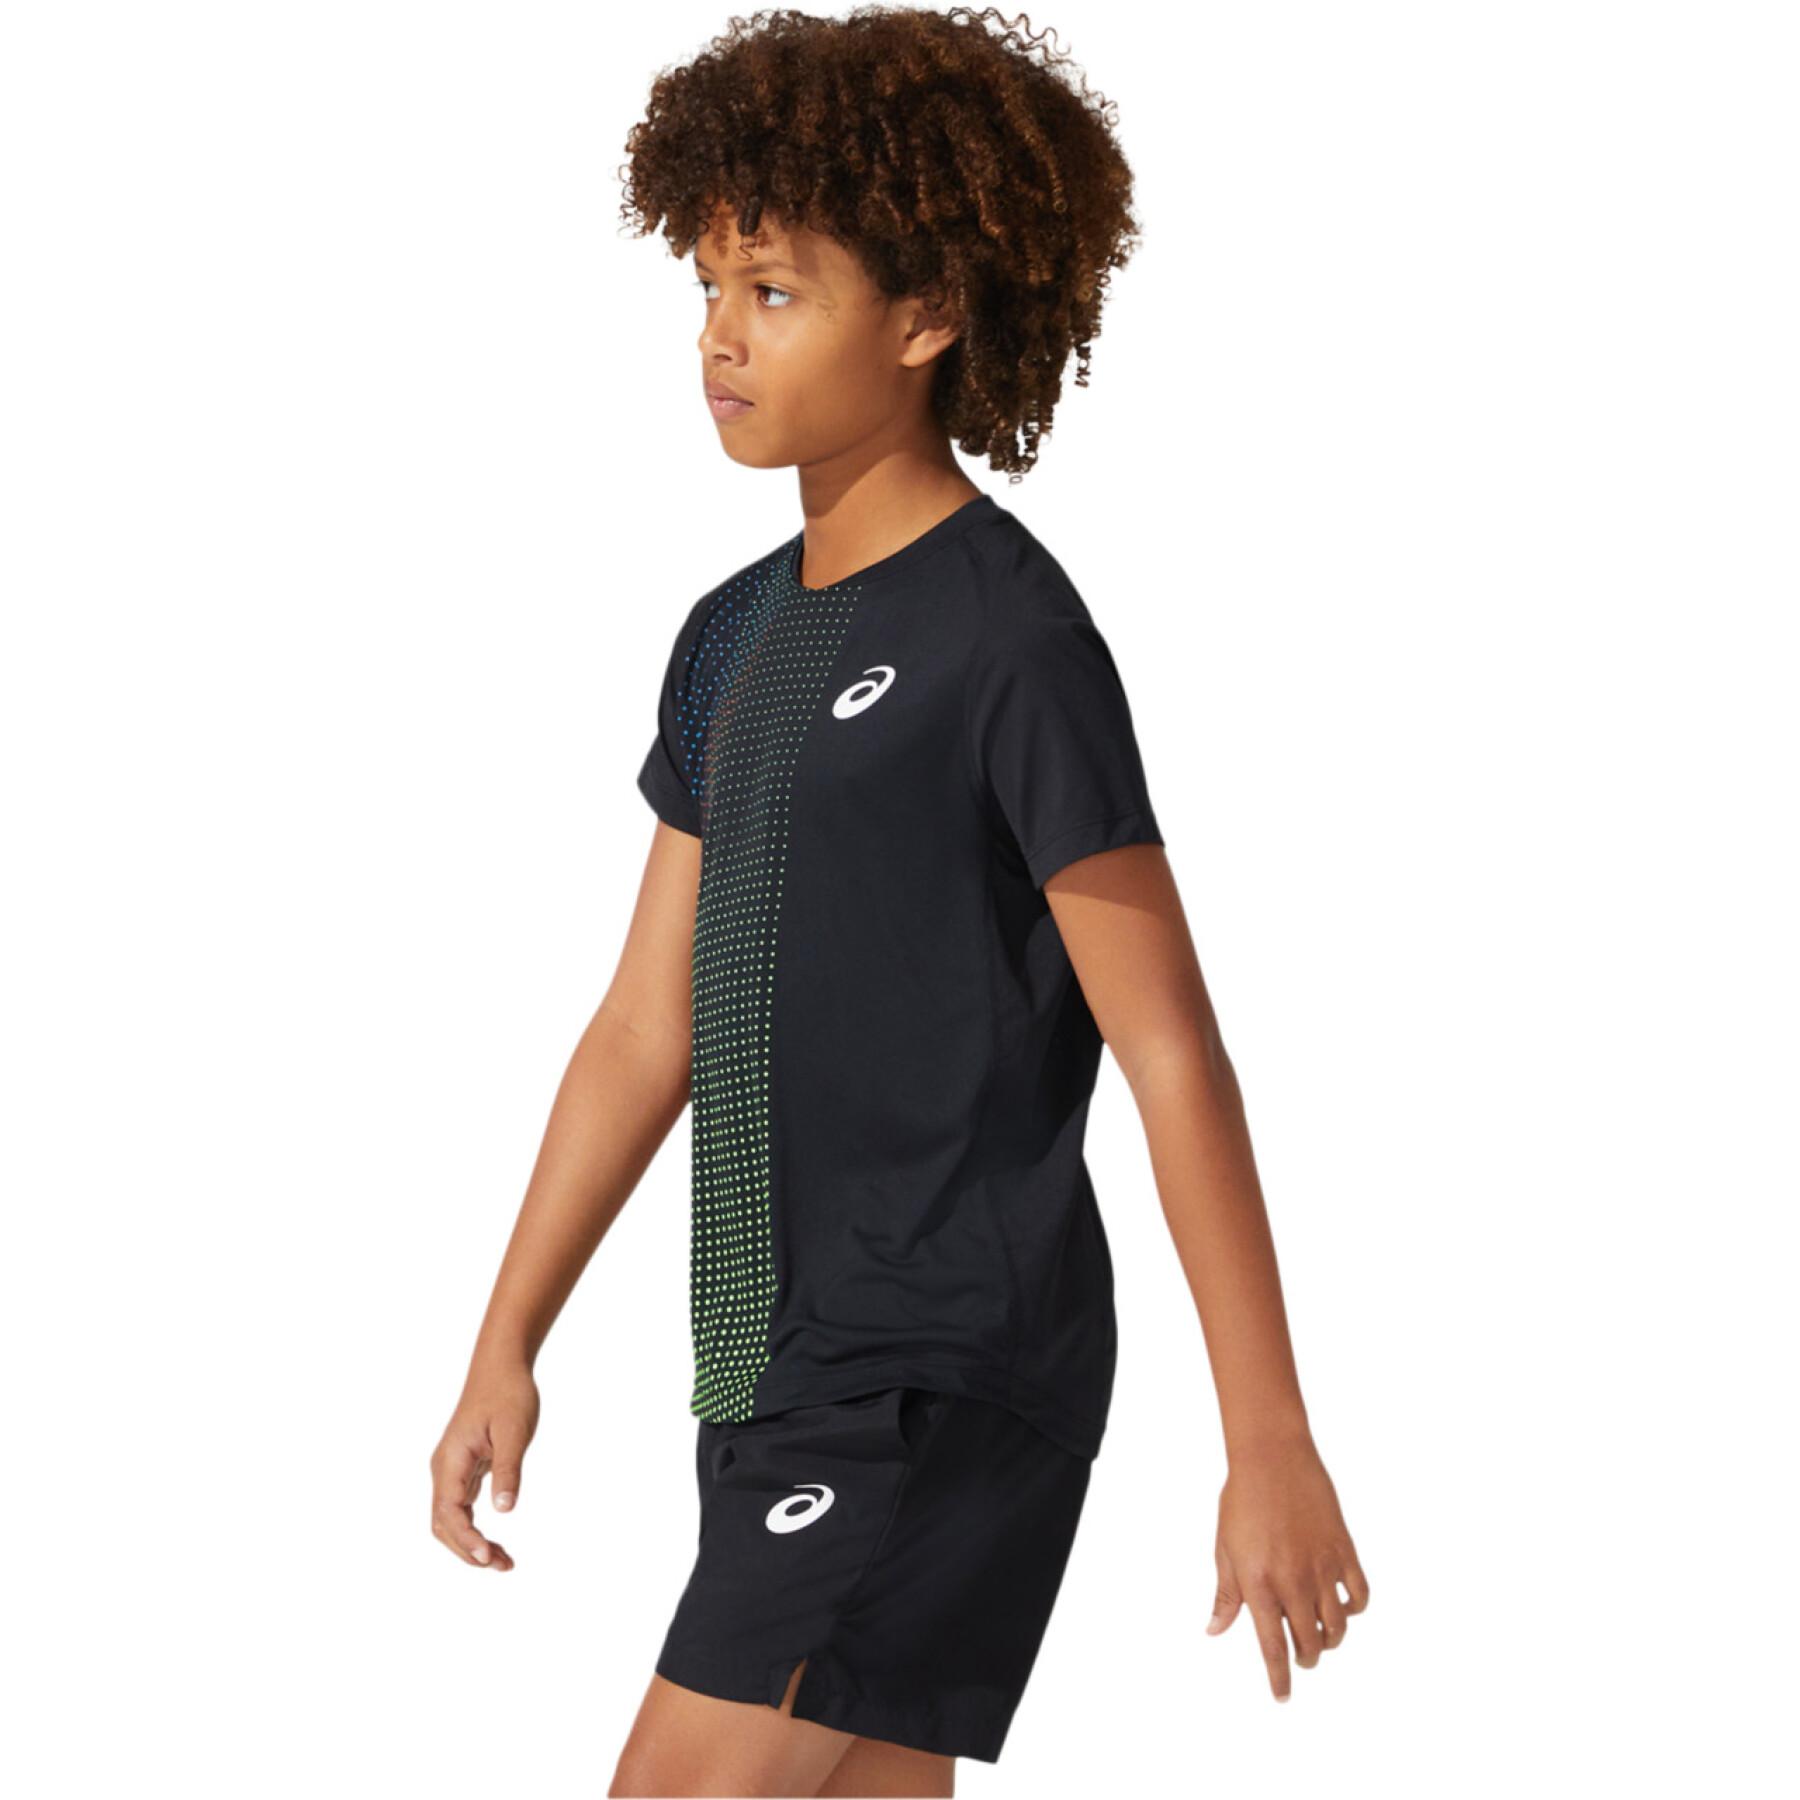 Camiseta sin mangas para niños Asics Boys Tennis Graphic